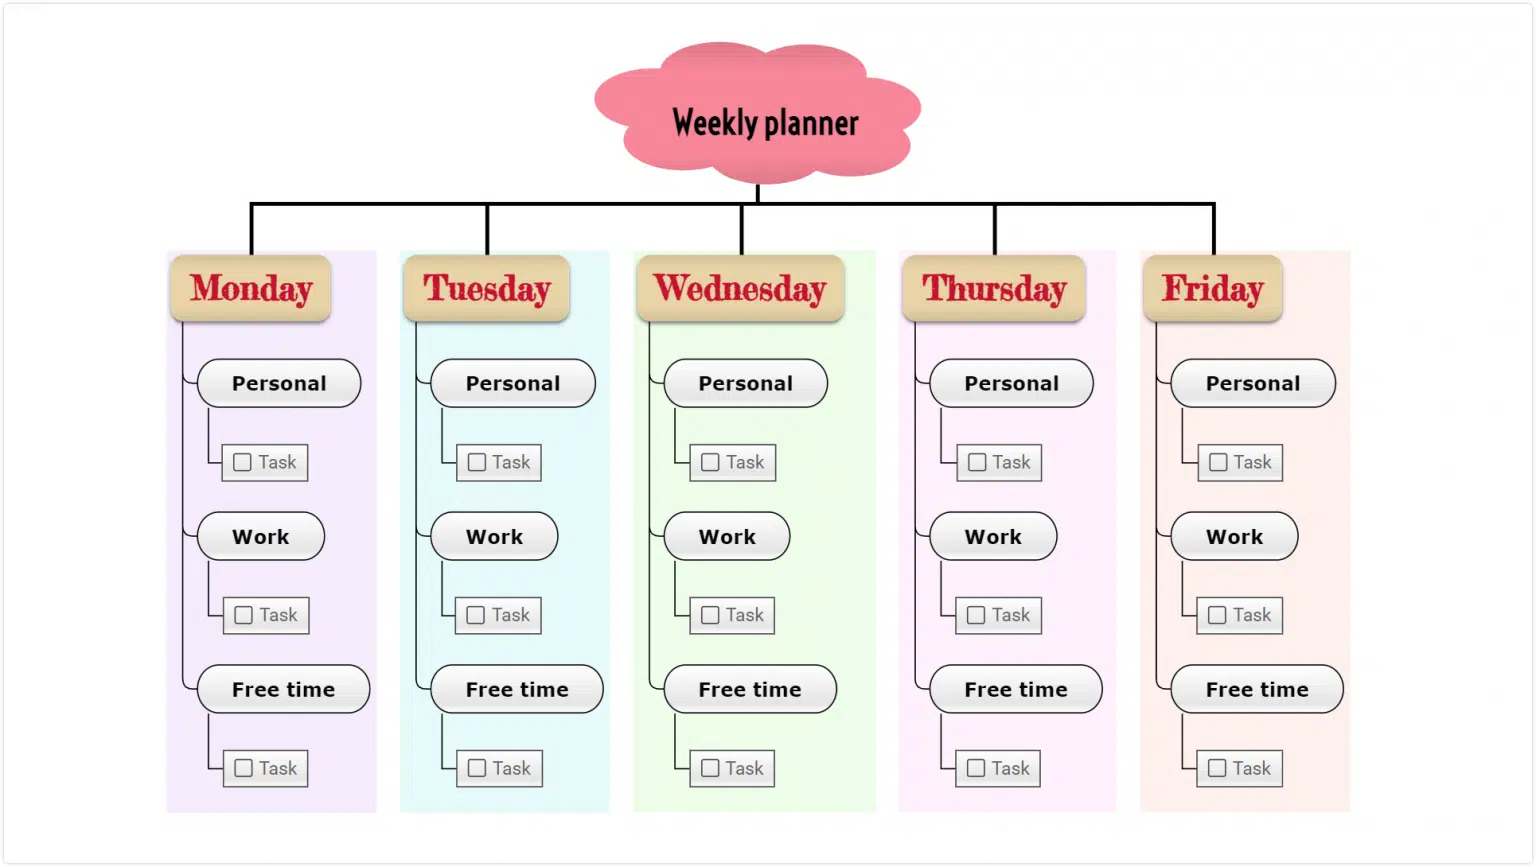 Weekly planner template